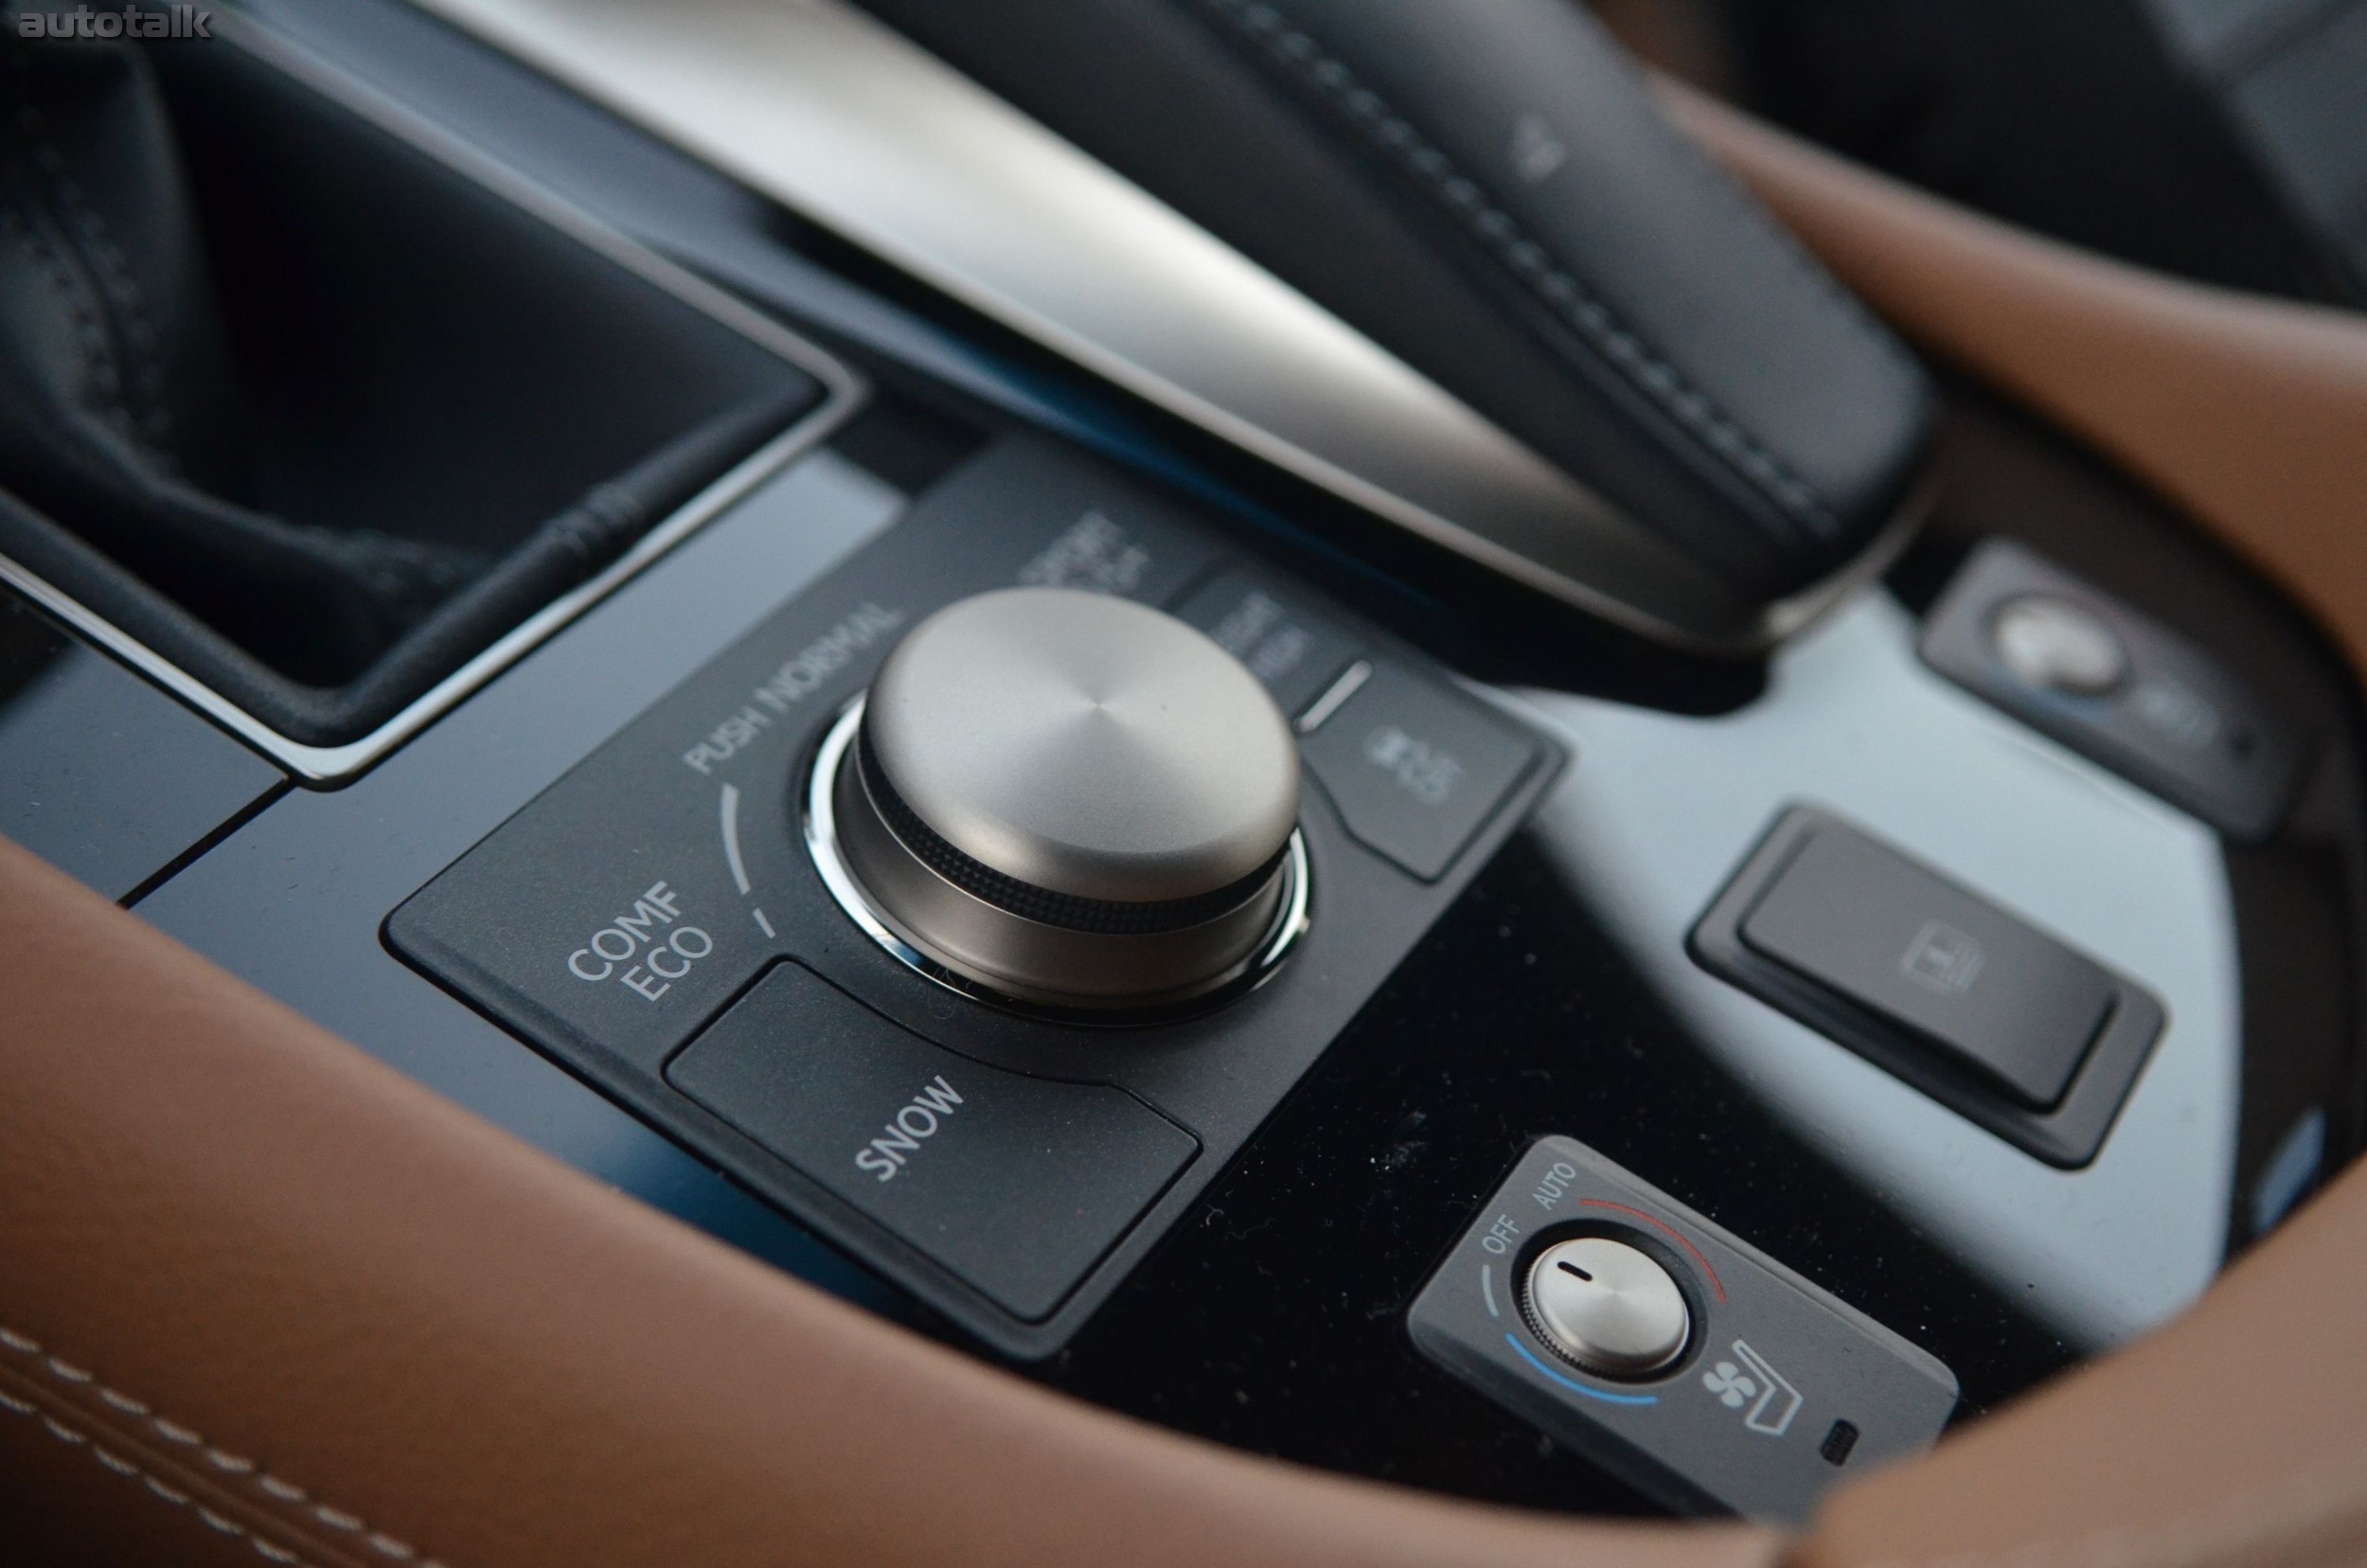 2014 Lexus LS 460 Review